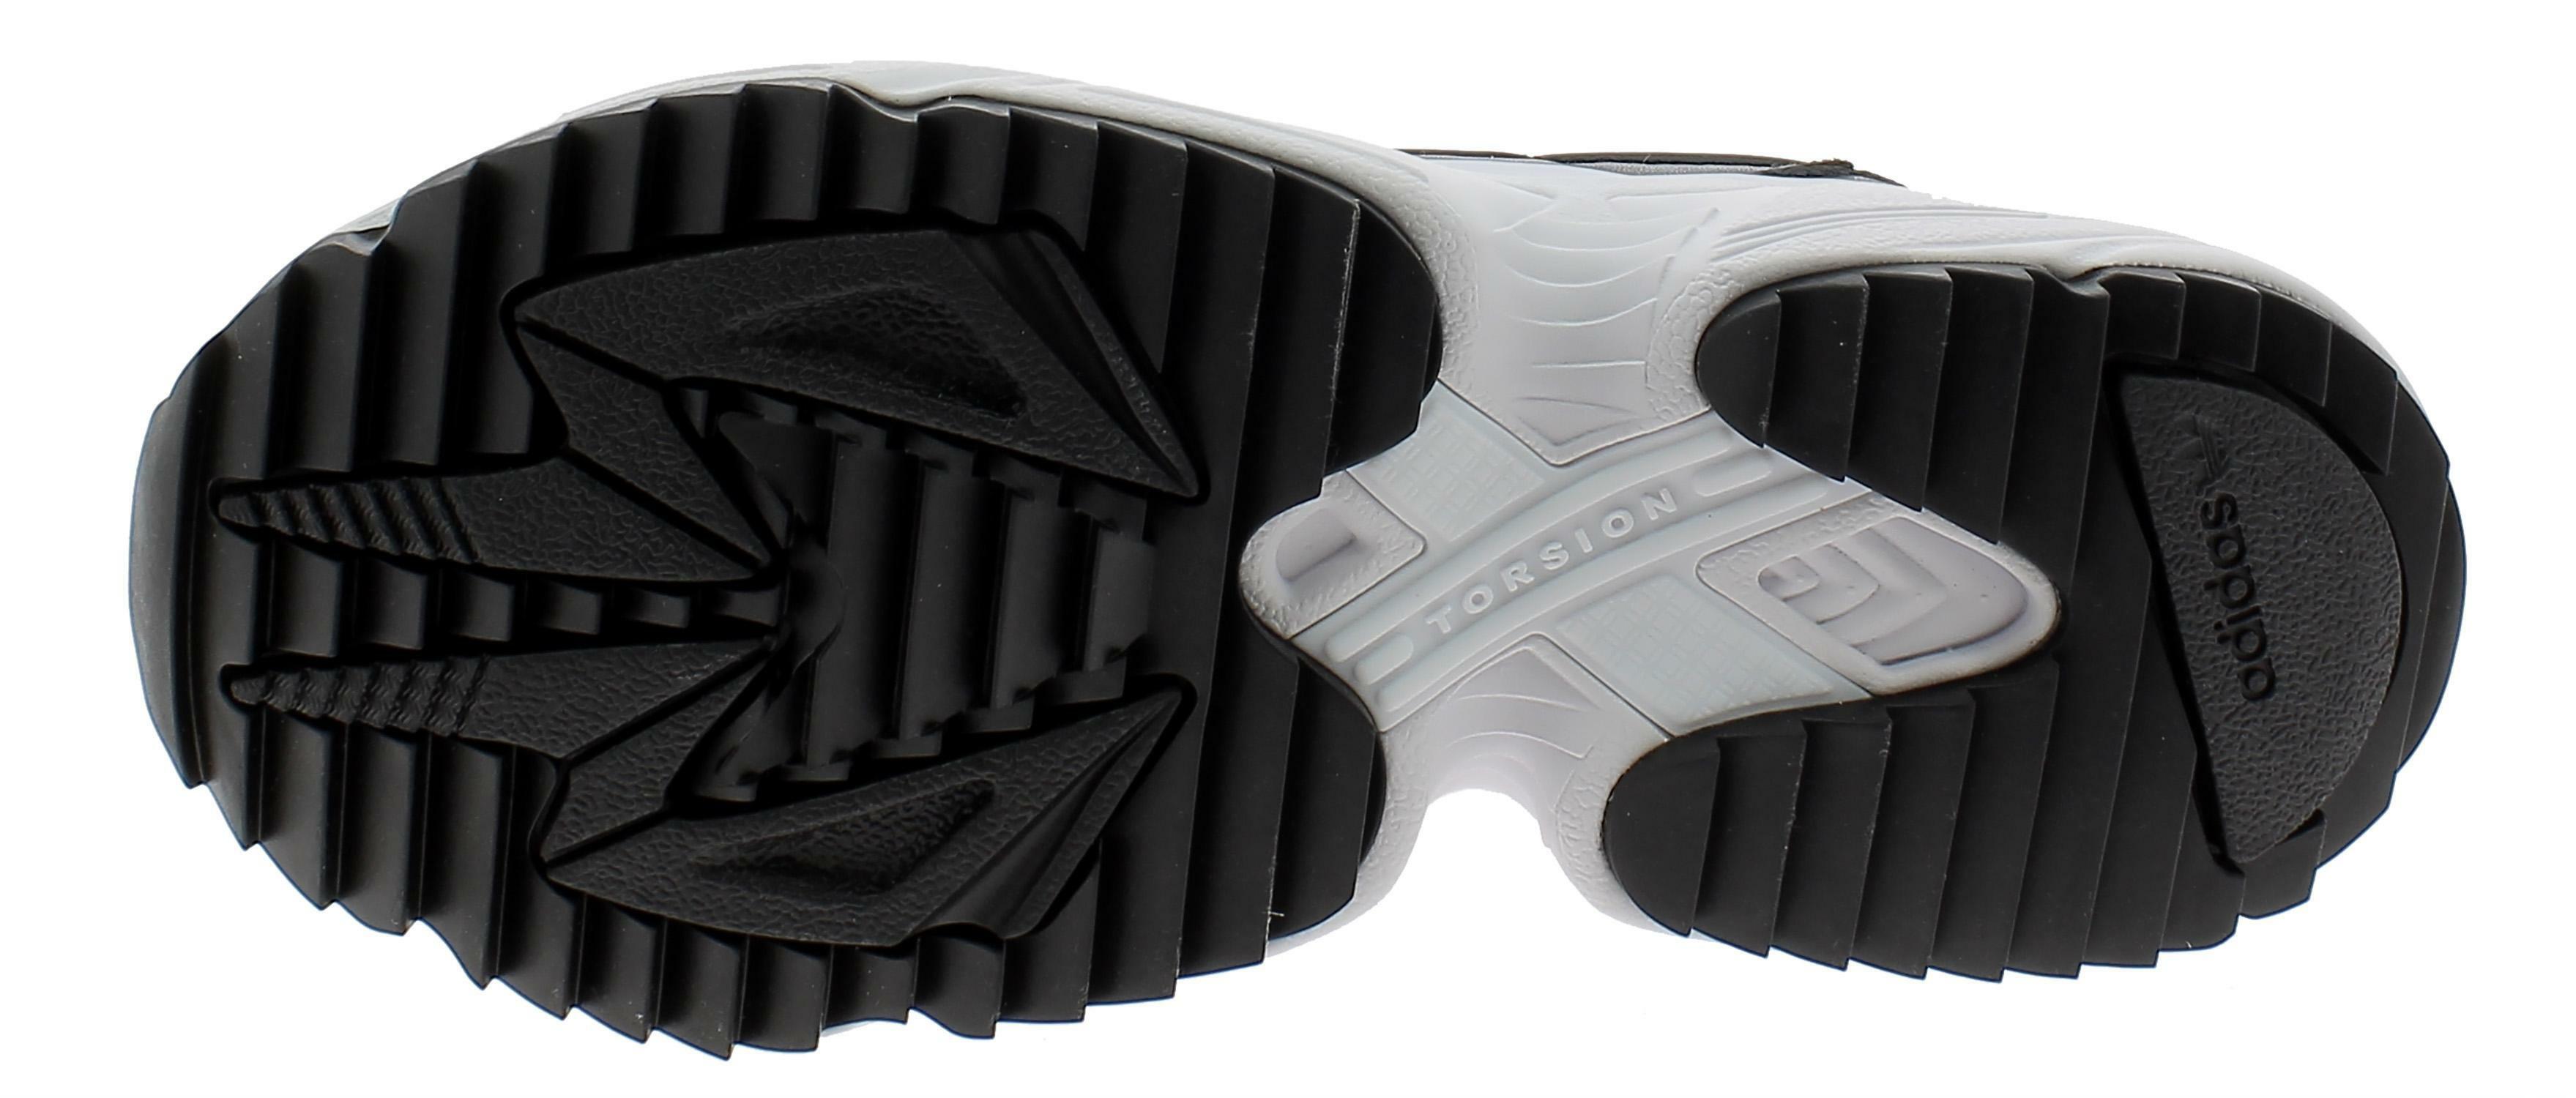 adidas originals adidas kiellor scarpe sportive donna nere ef5621